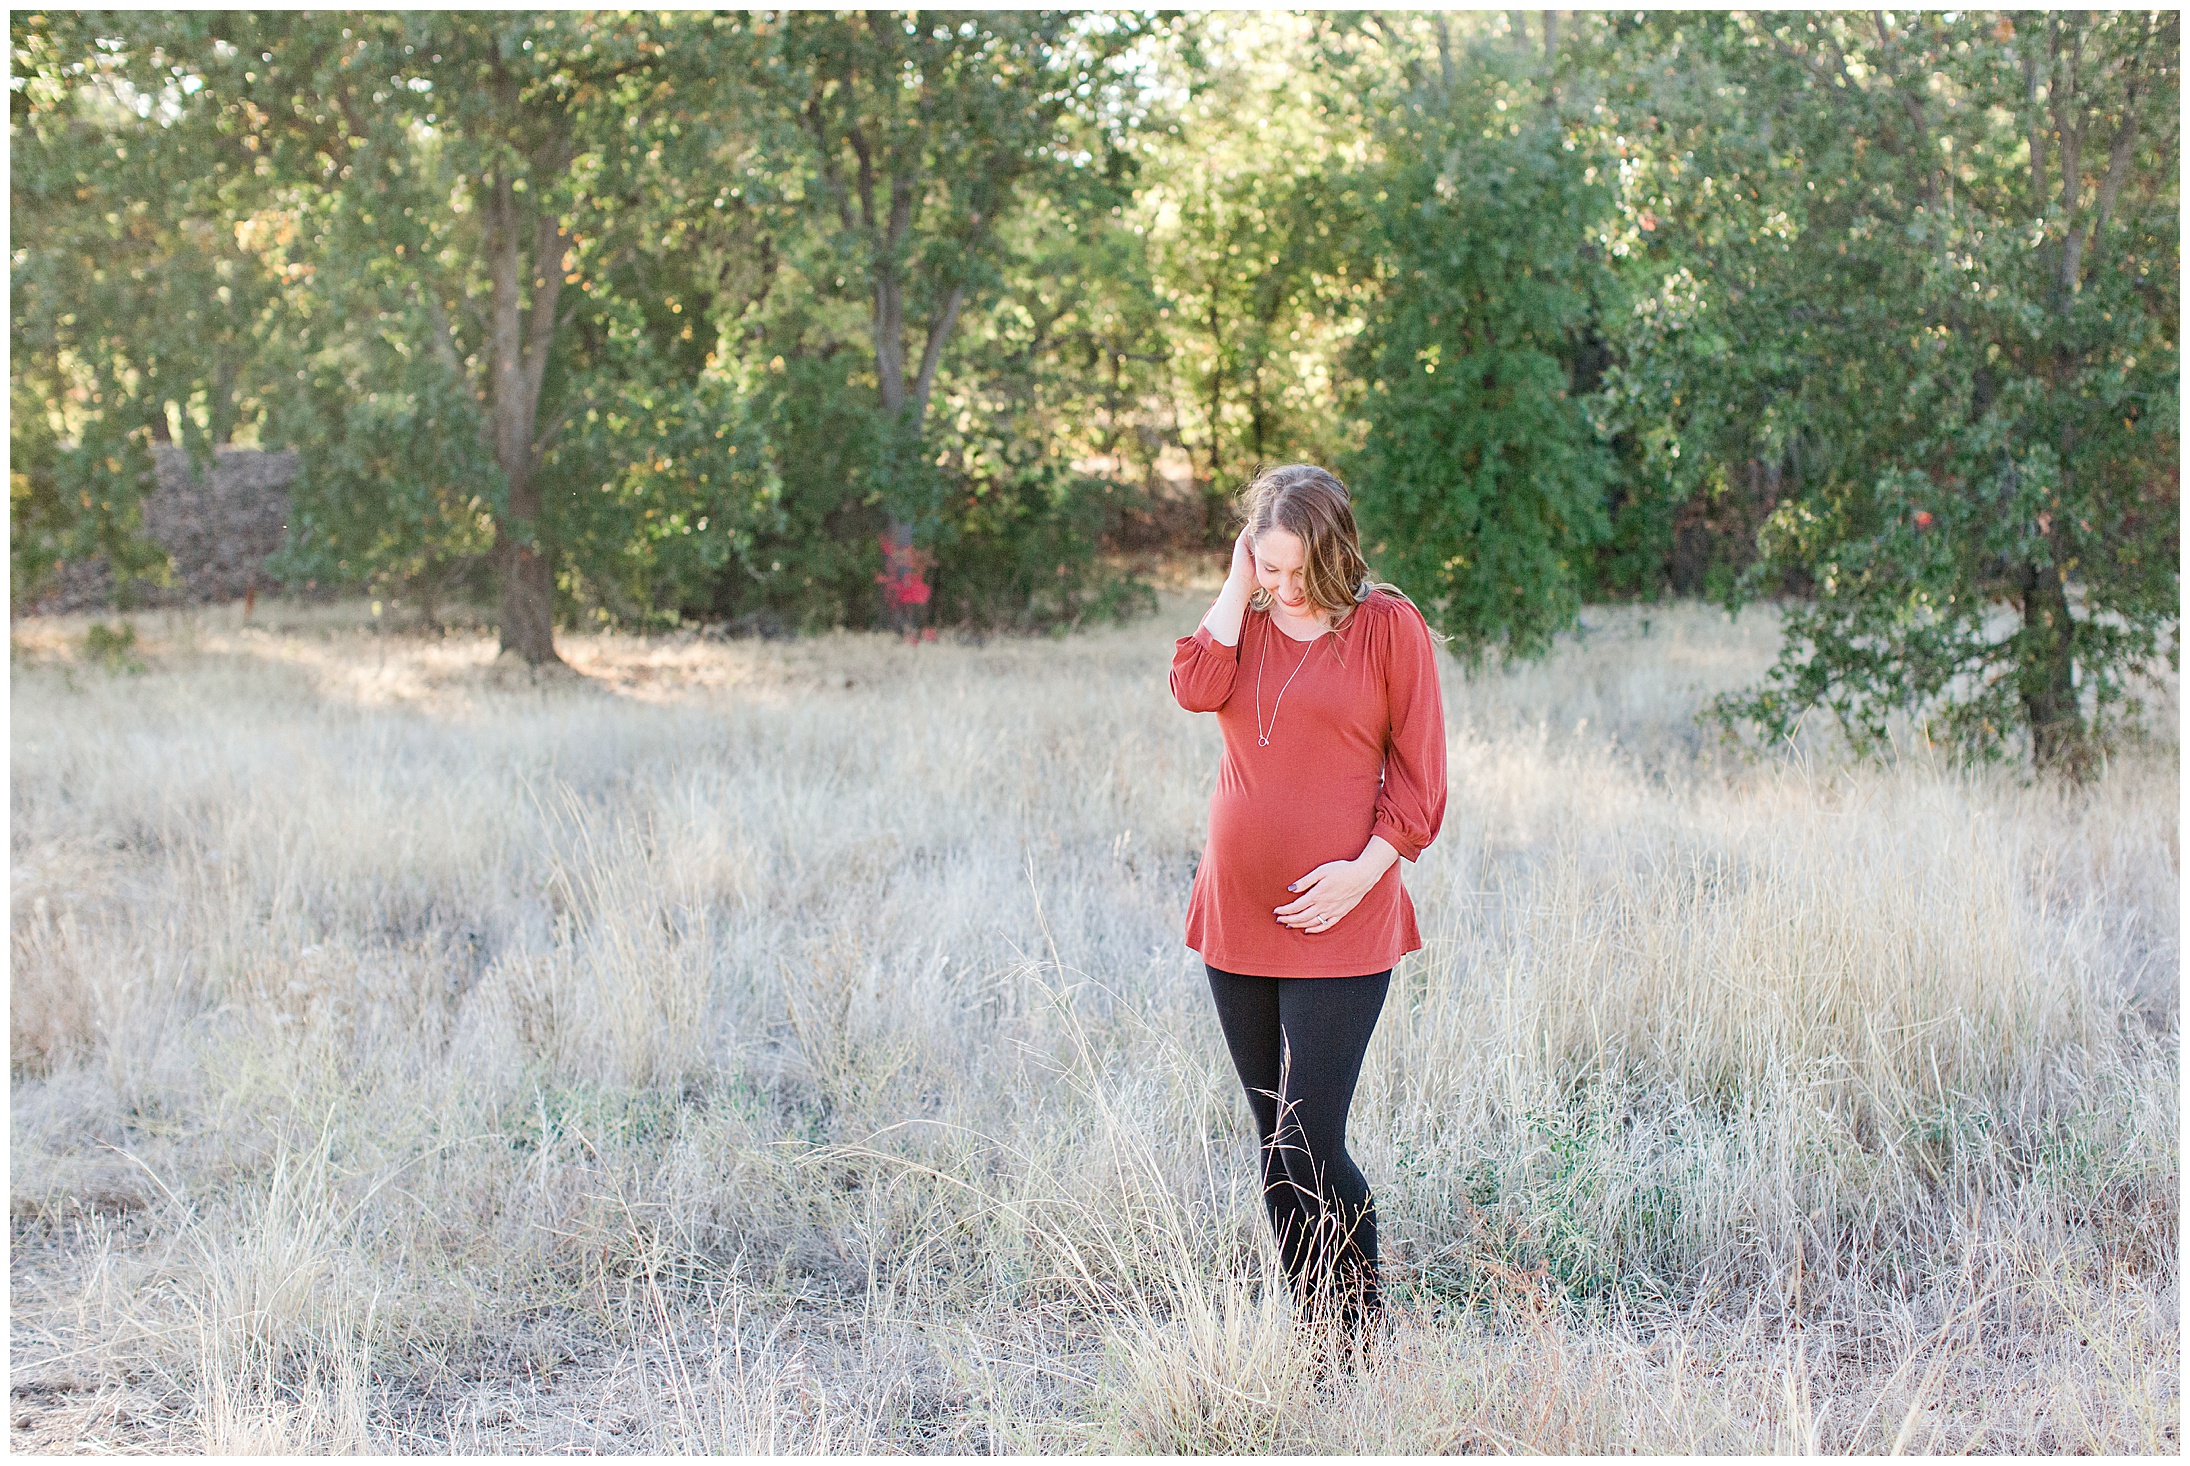 Grassy Fields Fall Maternity Family Session Chico California,